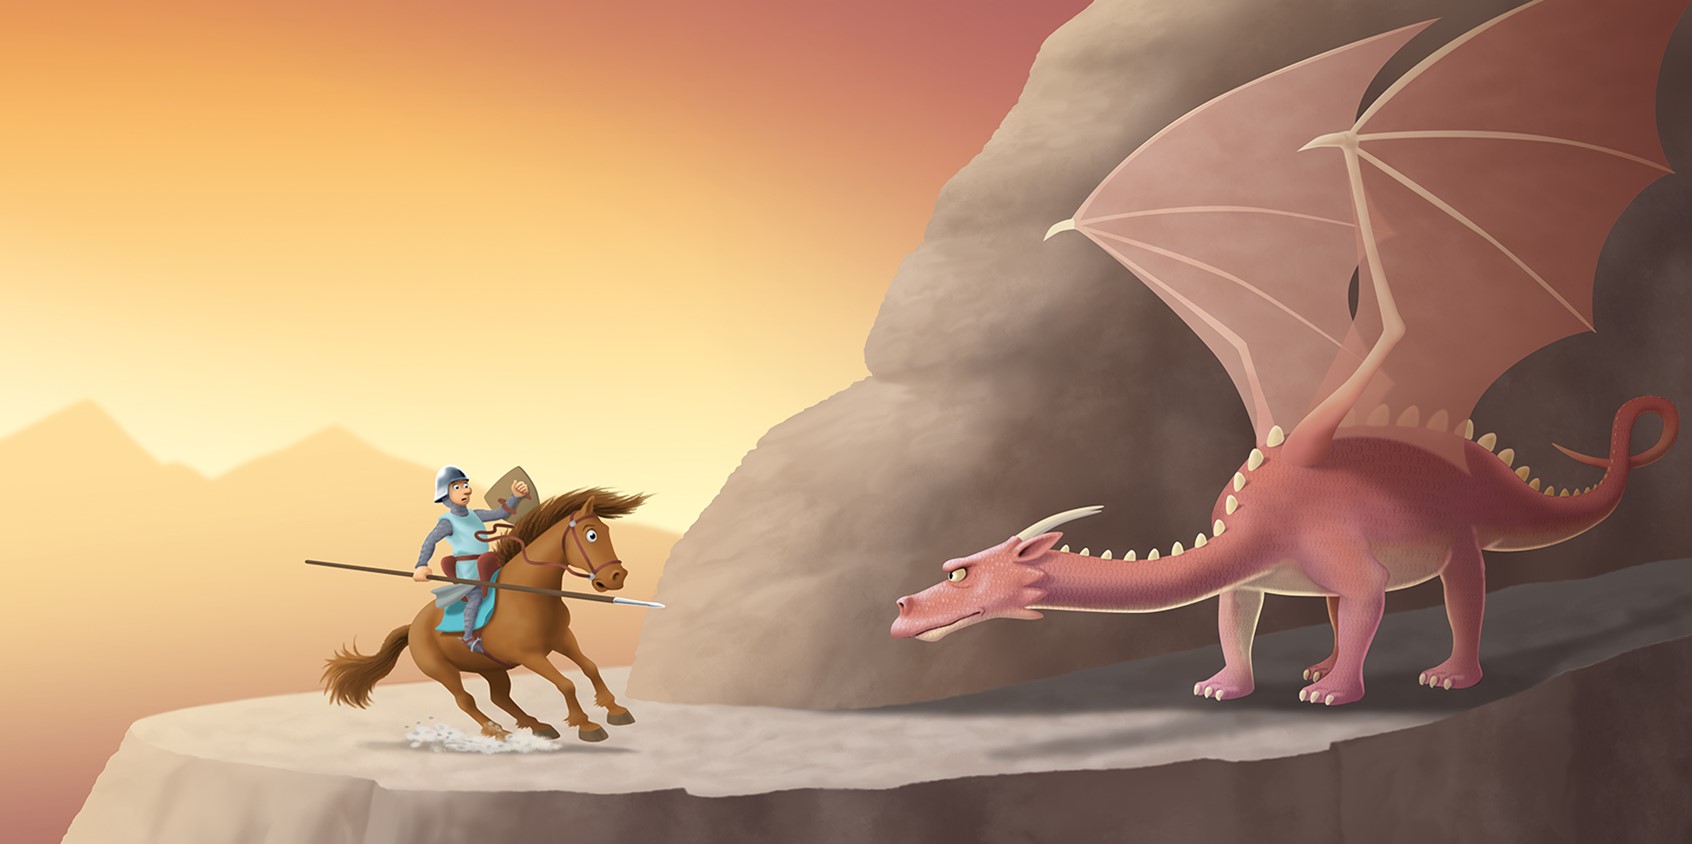 Robin Davies Illustration of Knights and Dragons